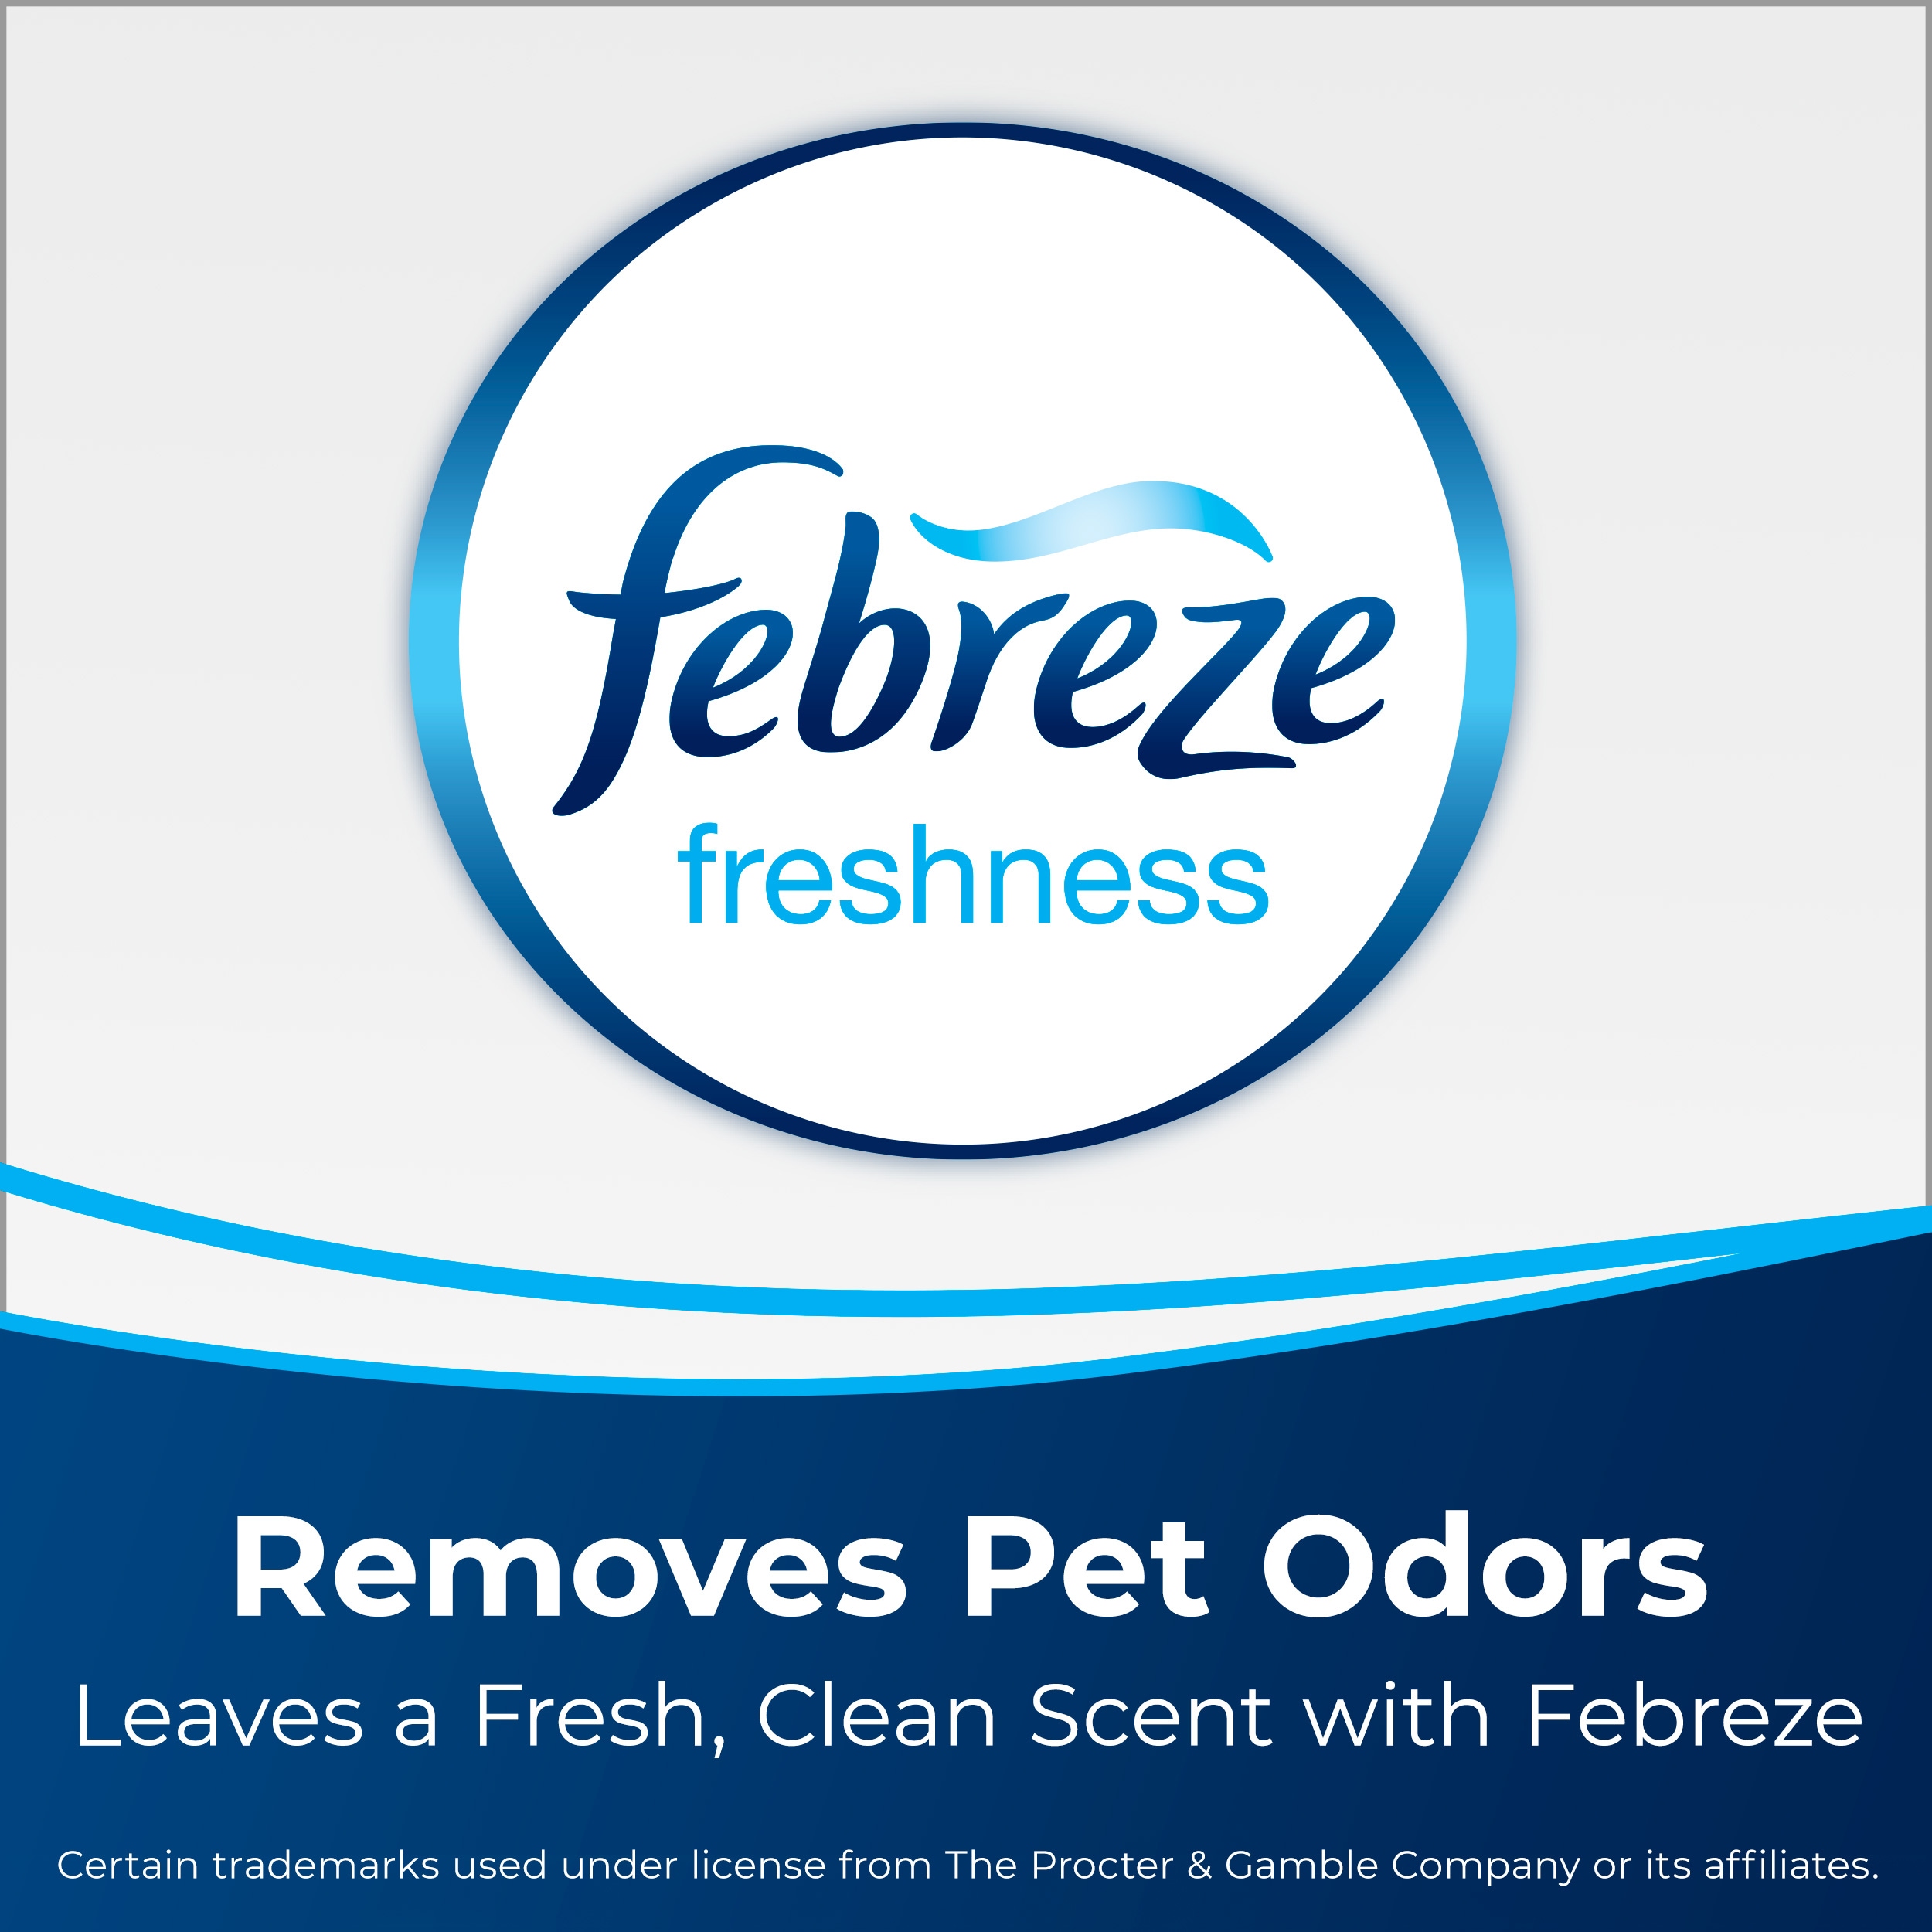 BISSELL Multi-Surface Pet Formula with Febreze Freshness for Crosswave (80  oz), 2295L